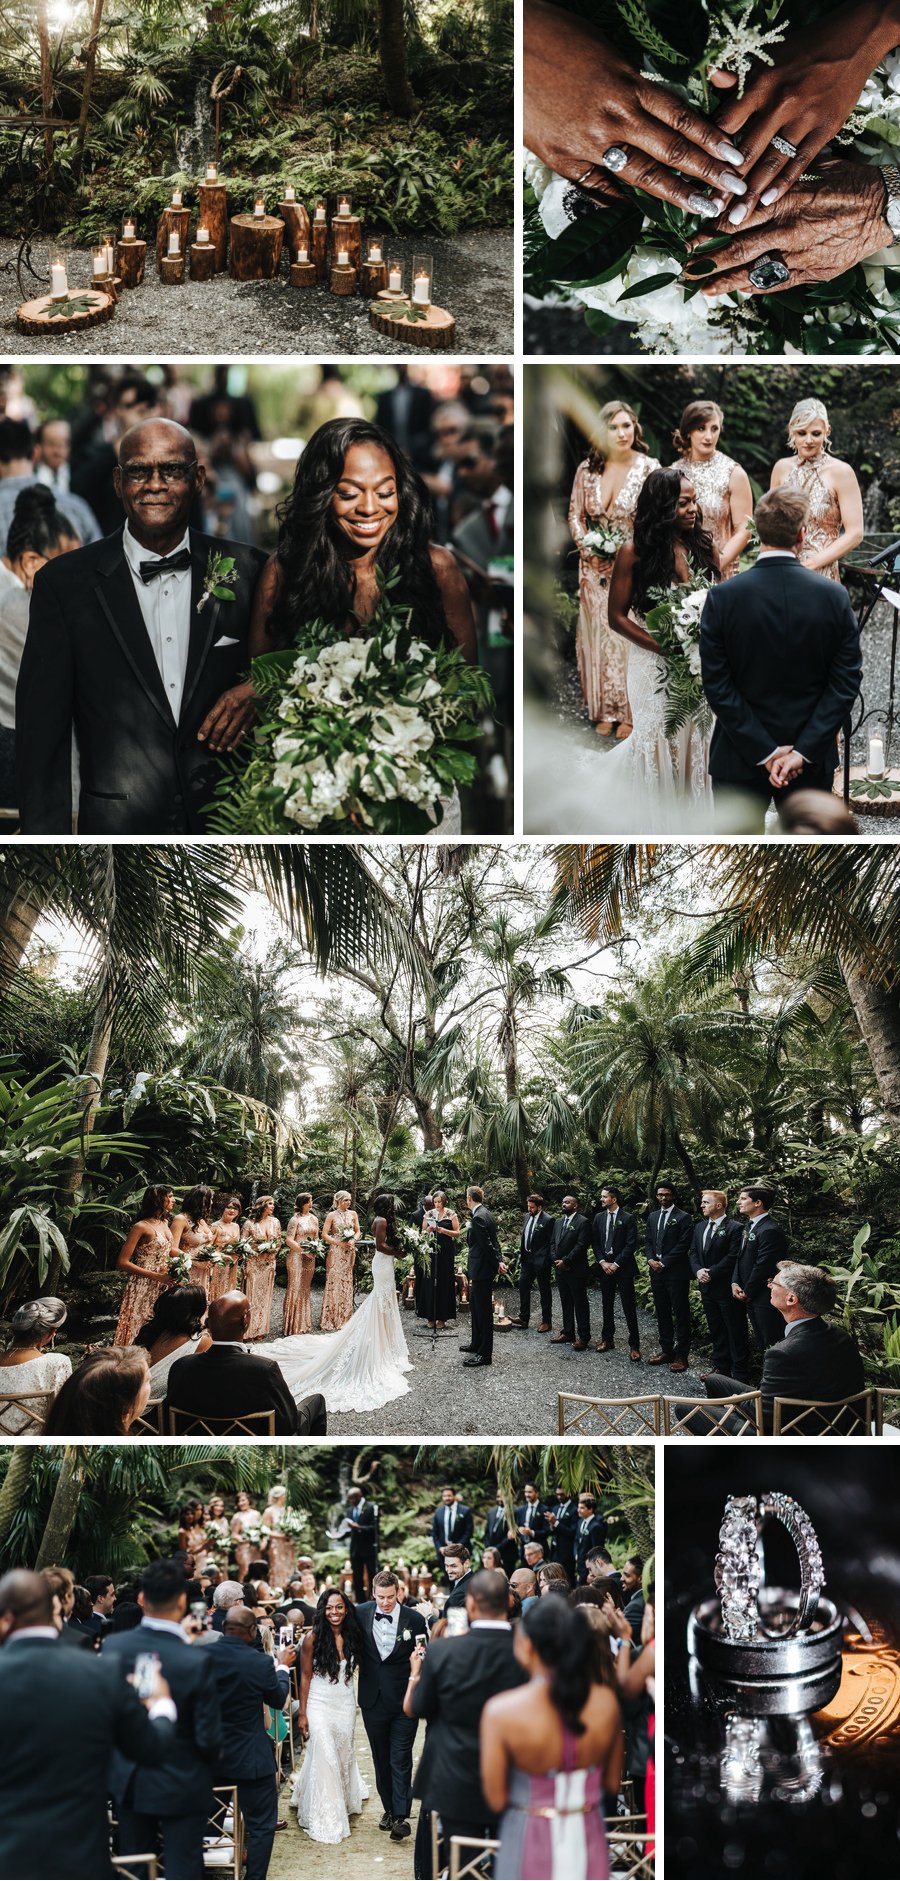 Real wedding: Tropical greenery in Miami